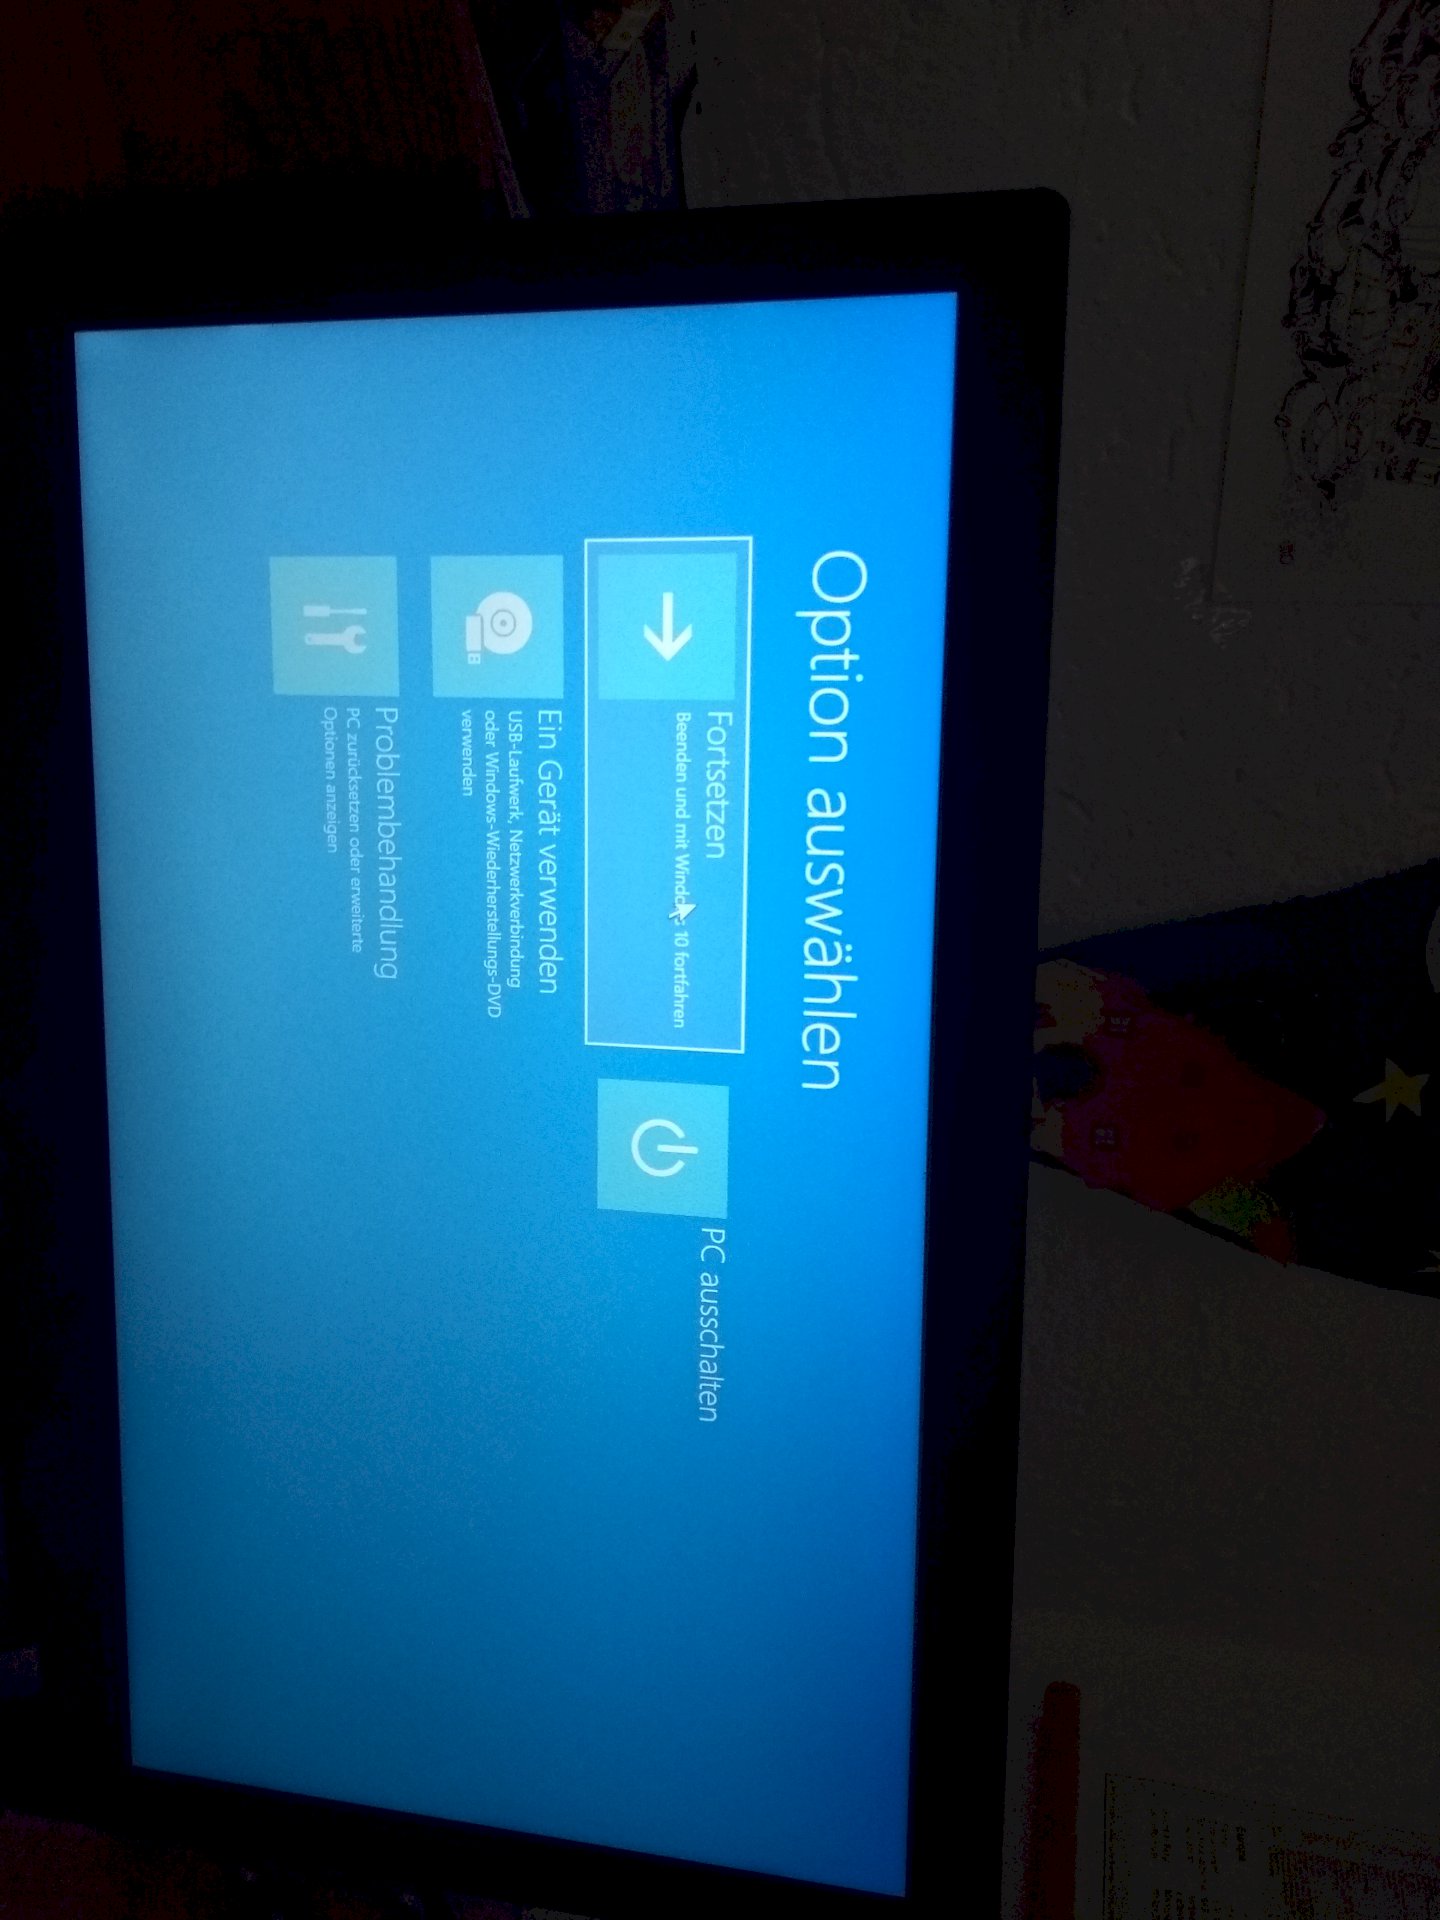 Windows startup error blue screen